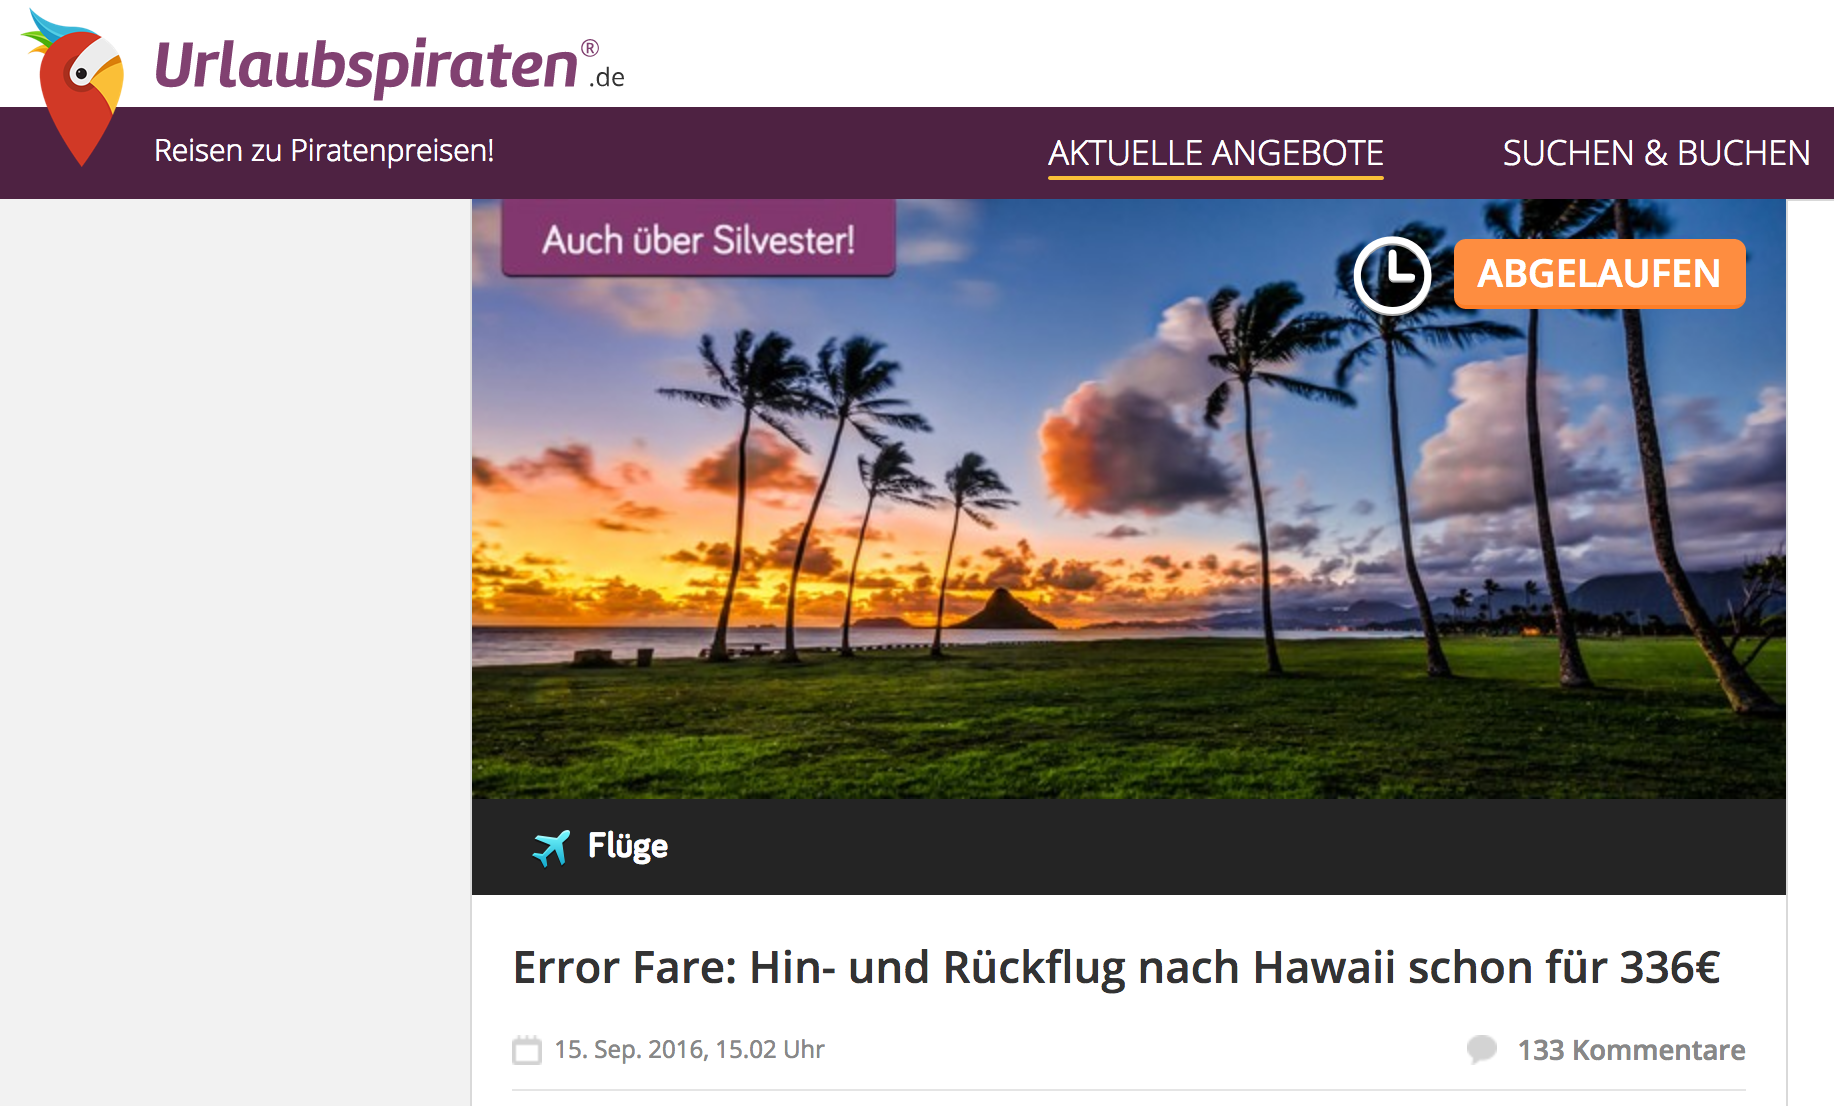 Error Fare: Hin- und Rueckflug nach Hawaii